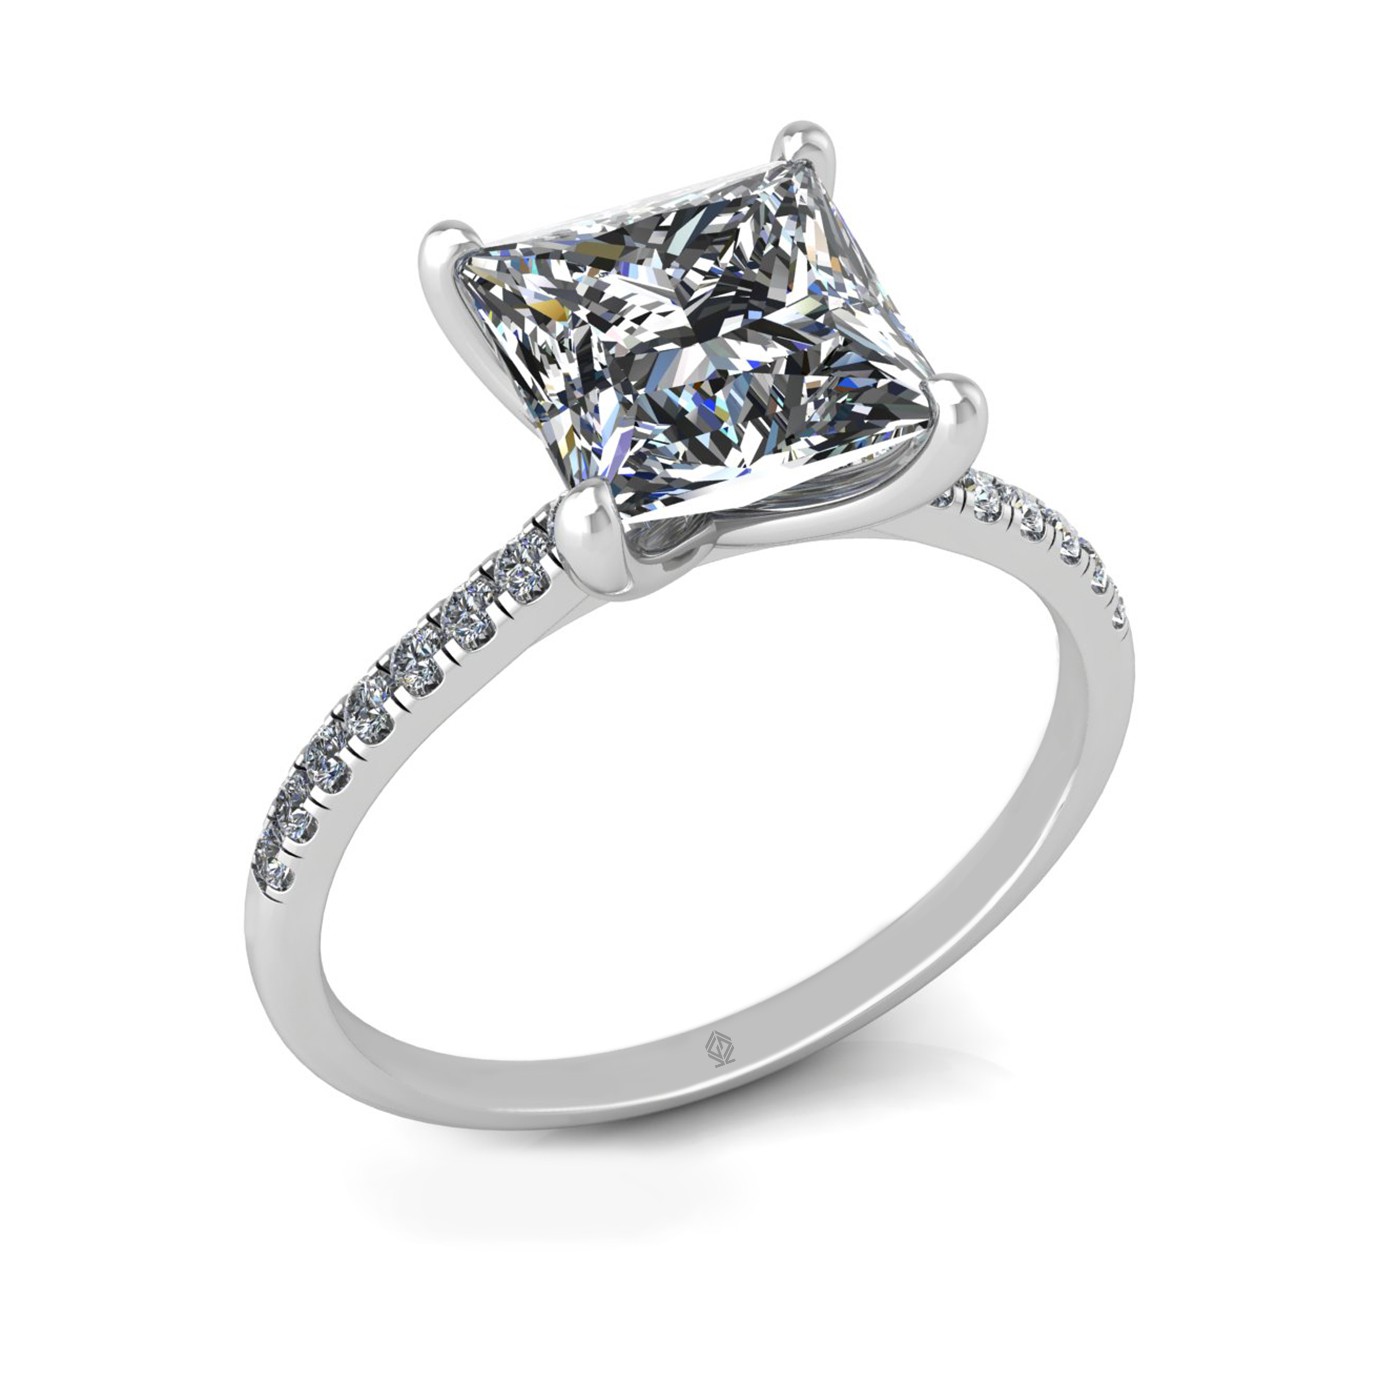 18k white gold 2,50 ct 4 prongs princess cut diamond engagement ring with whisper thin pavÉ set band